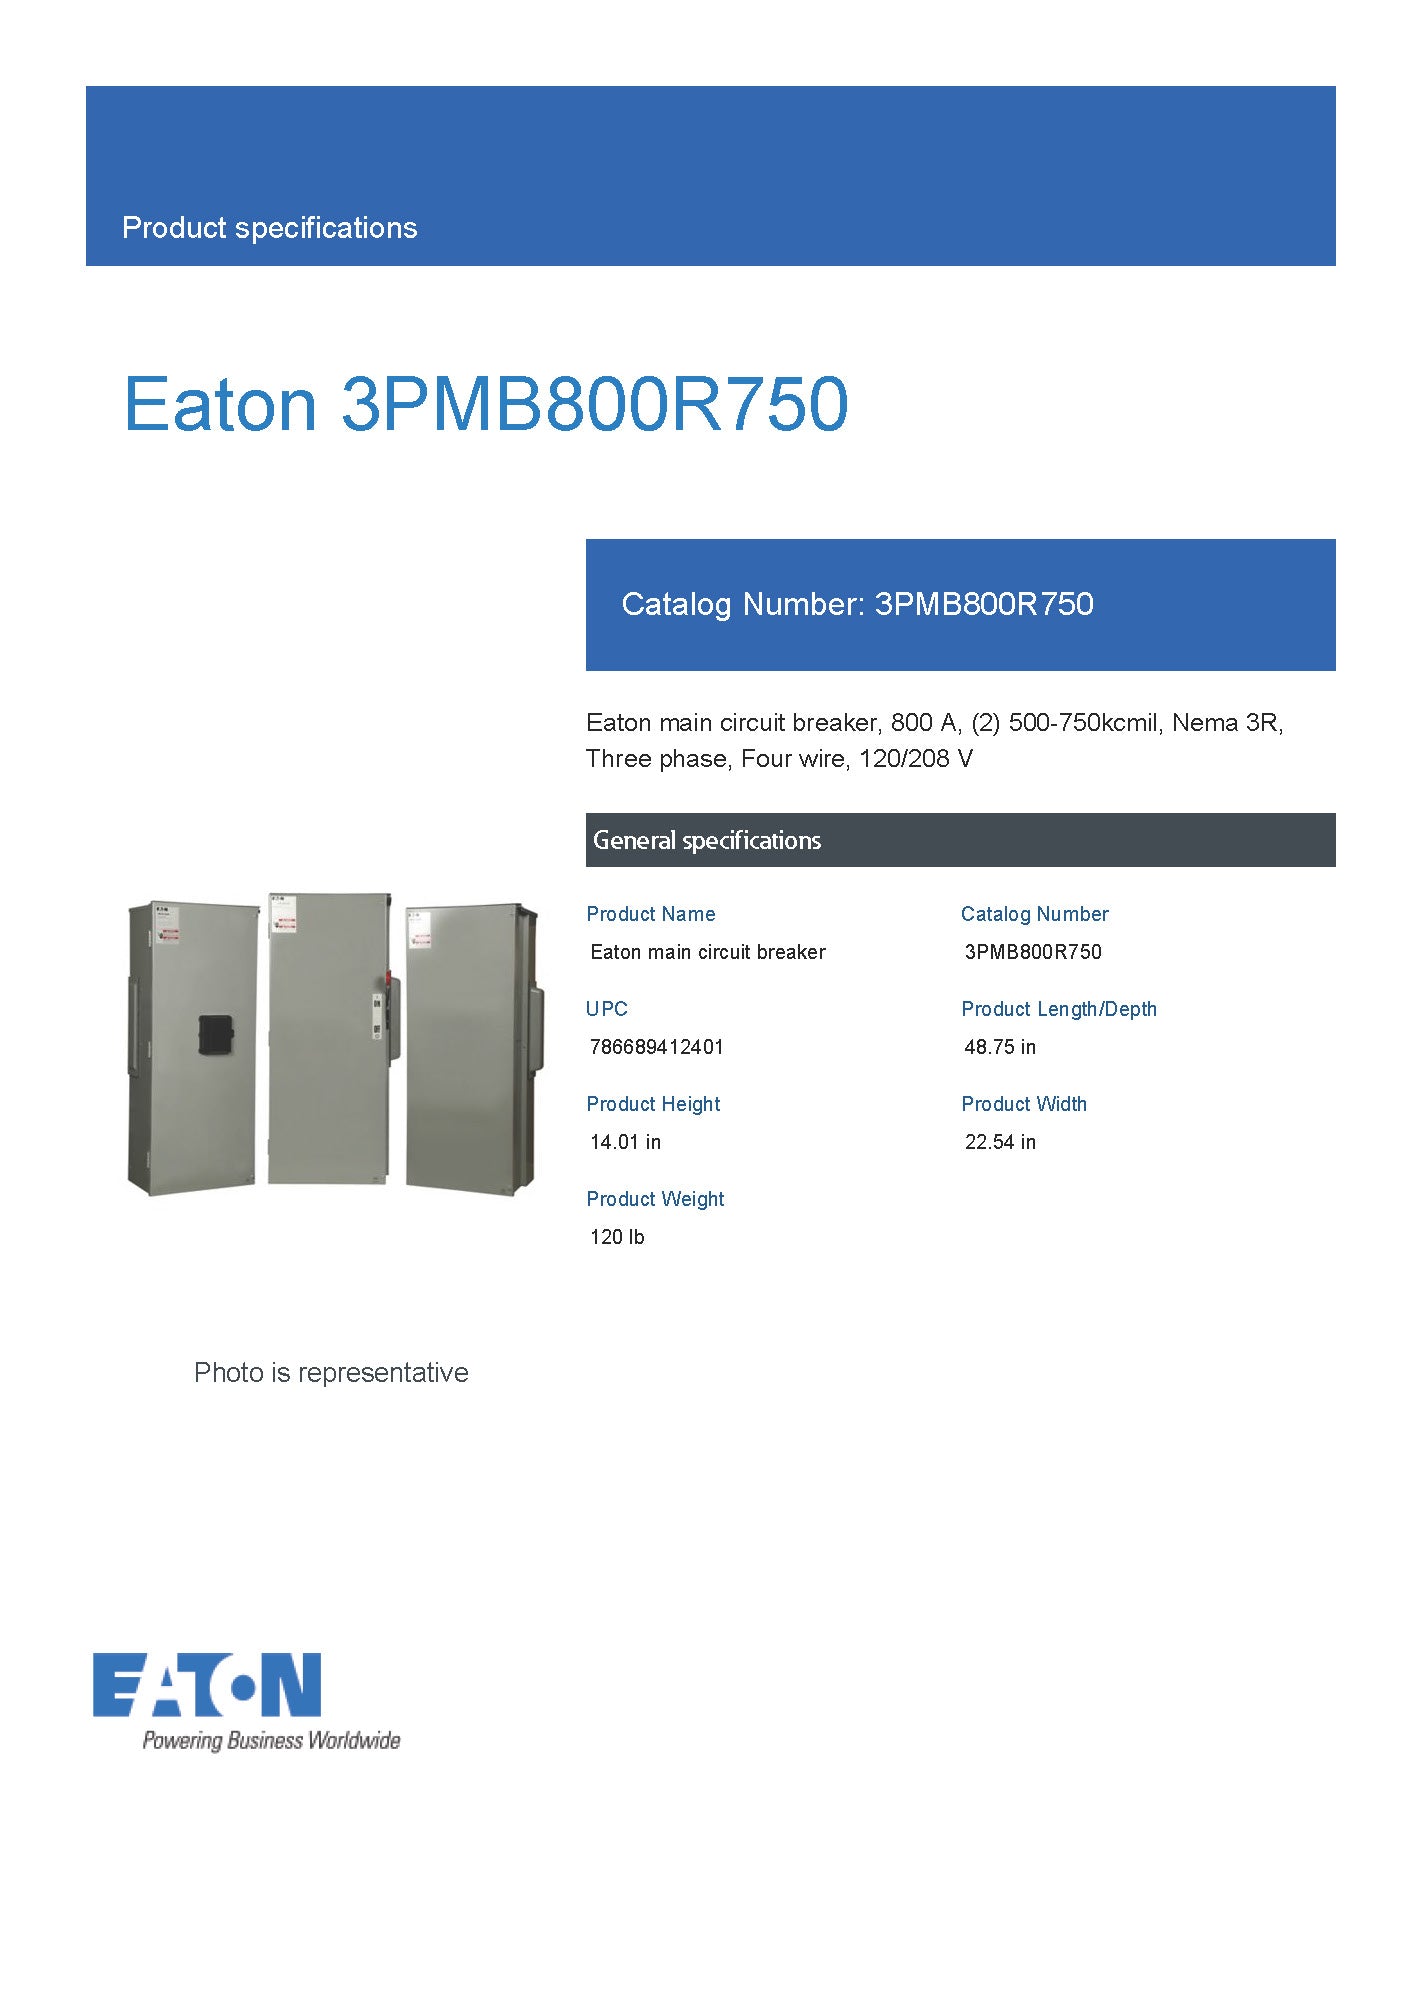 Eaton 3PMB800R750 3 Phase 800A Main Circuit Breaker Disconnect